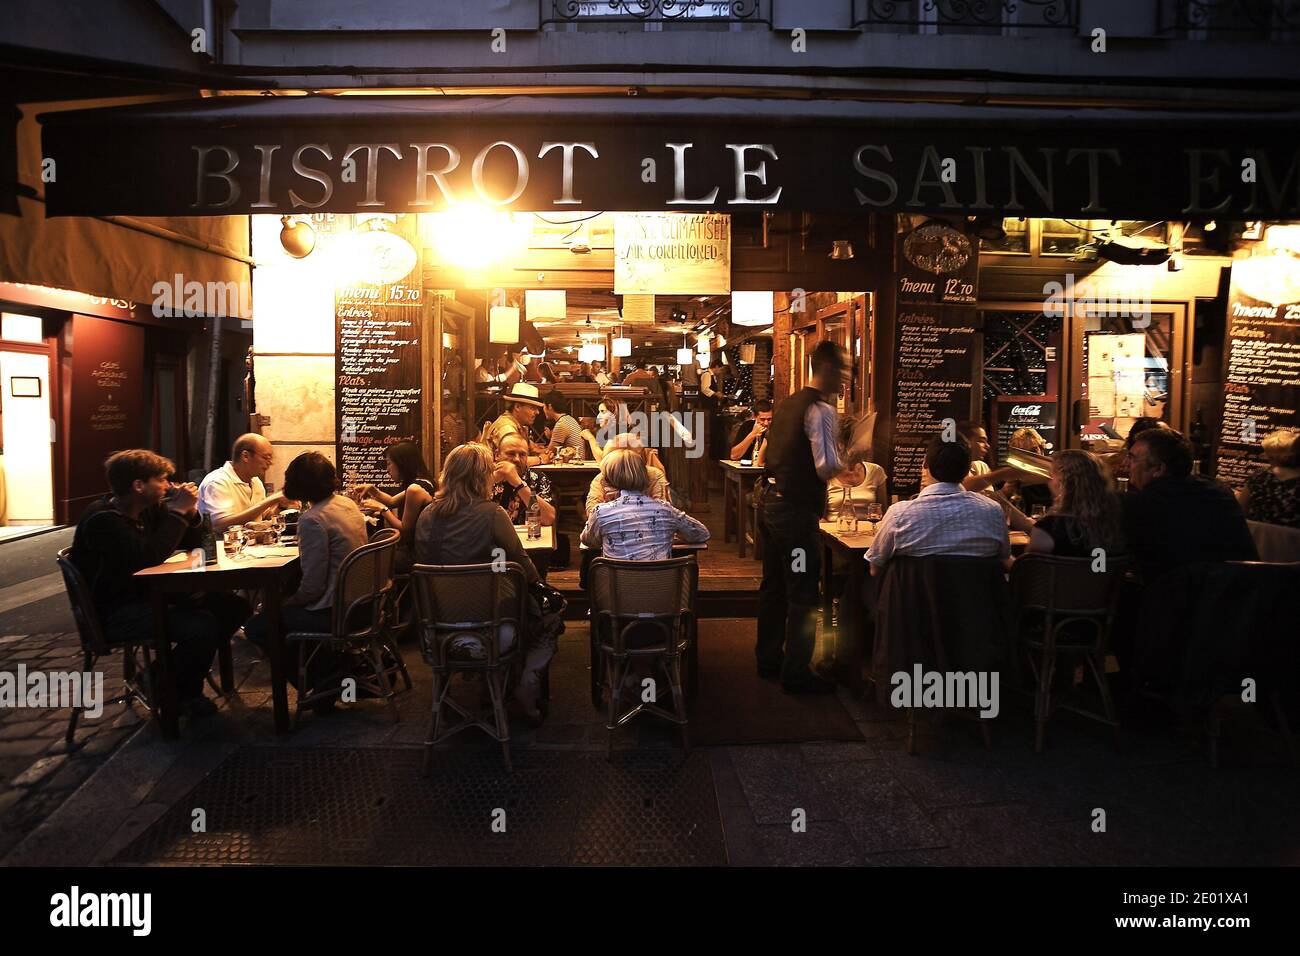 FRANCE / IIe-de-France/Paris/ Bistrot in Latin Quarter at night Stock Photo